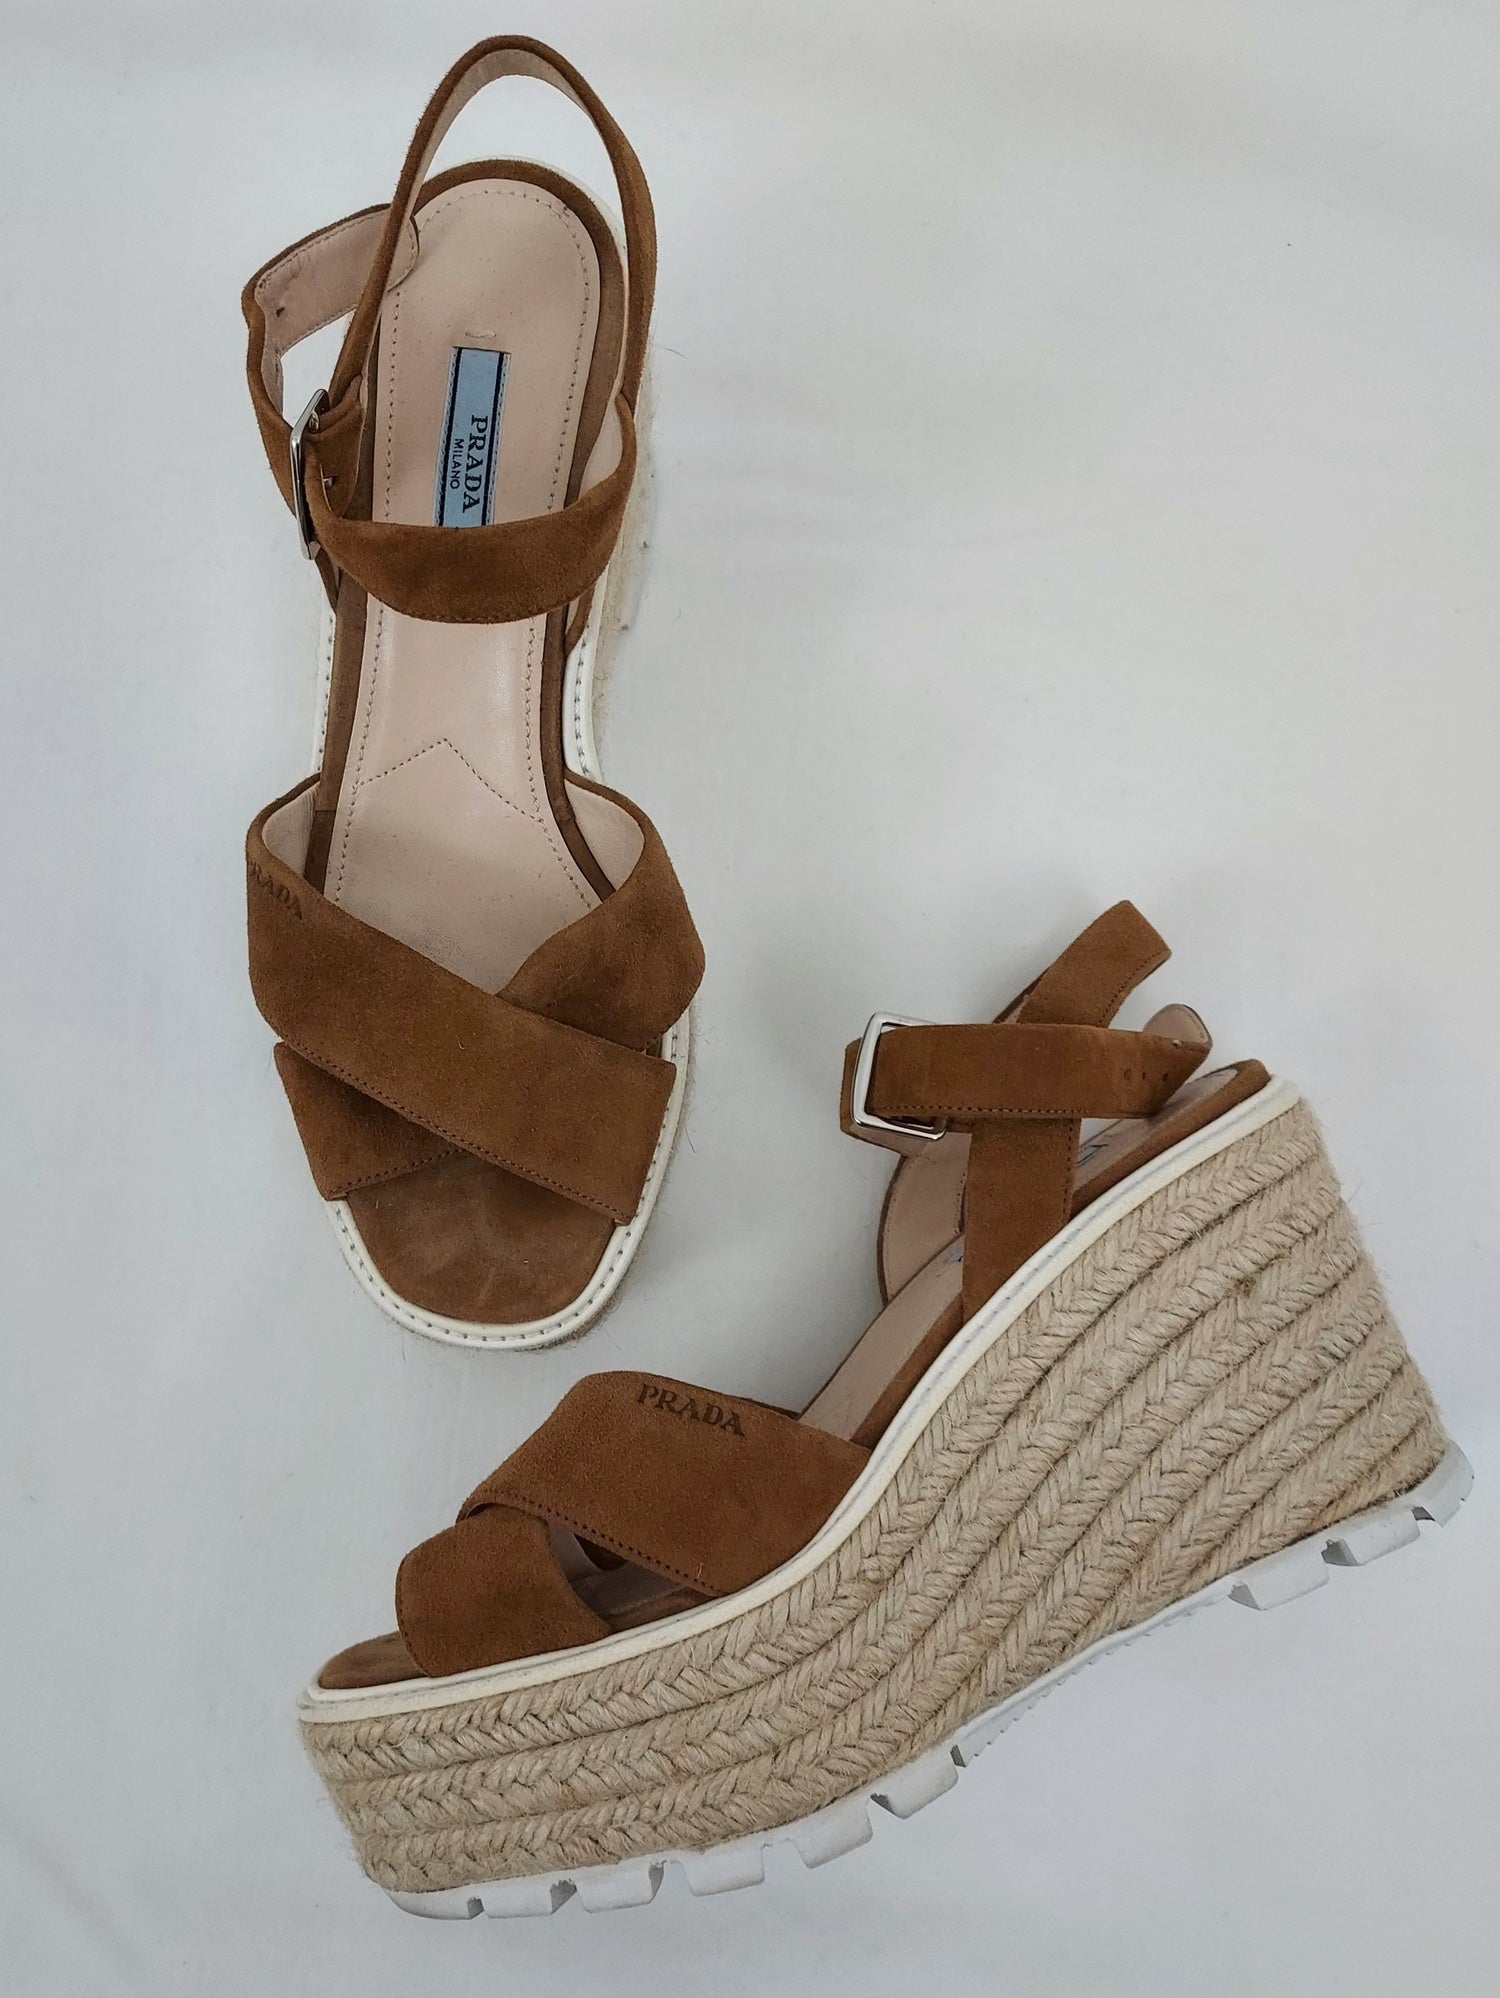 Suede Platform Espadrille Sandals Size 38